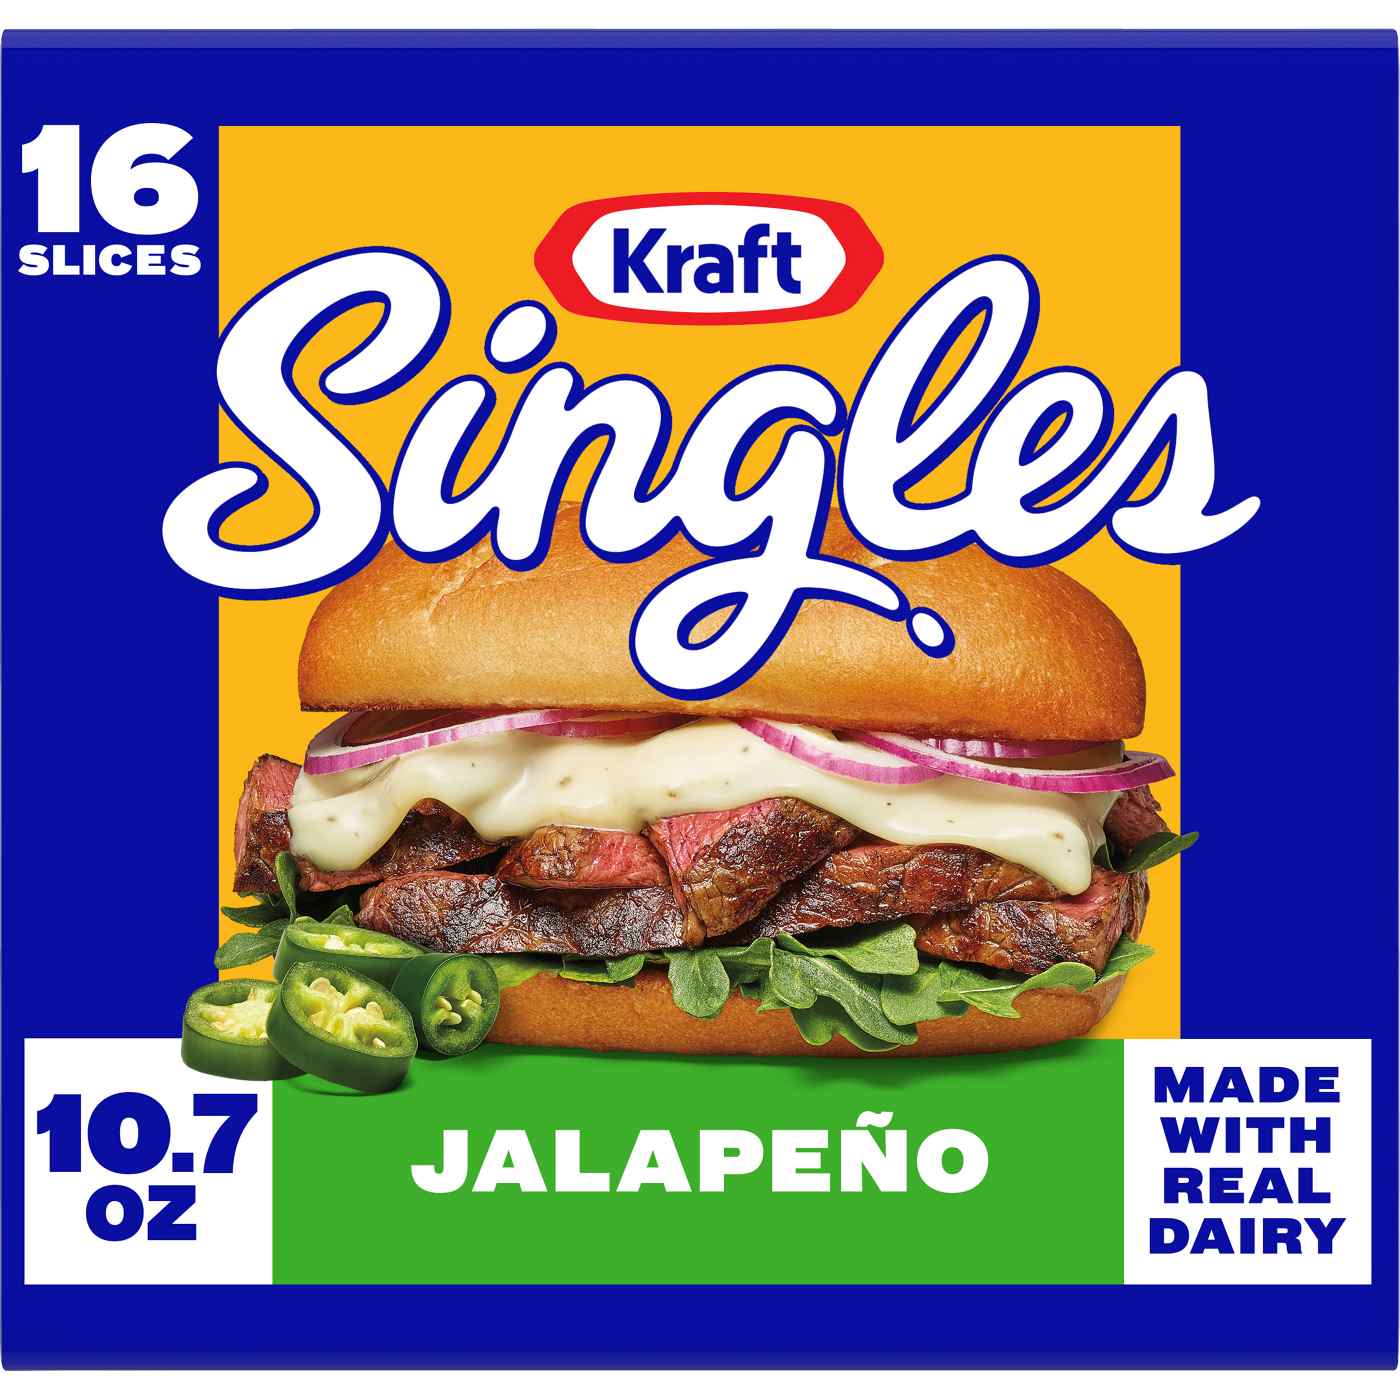 Kraft Singles Jalapeno Sliced Cheese; image 1 of 4